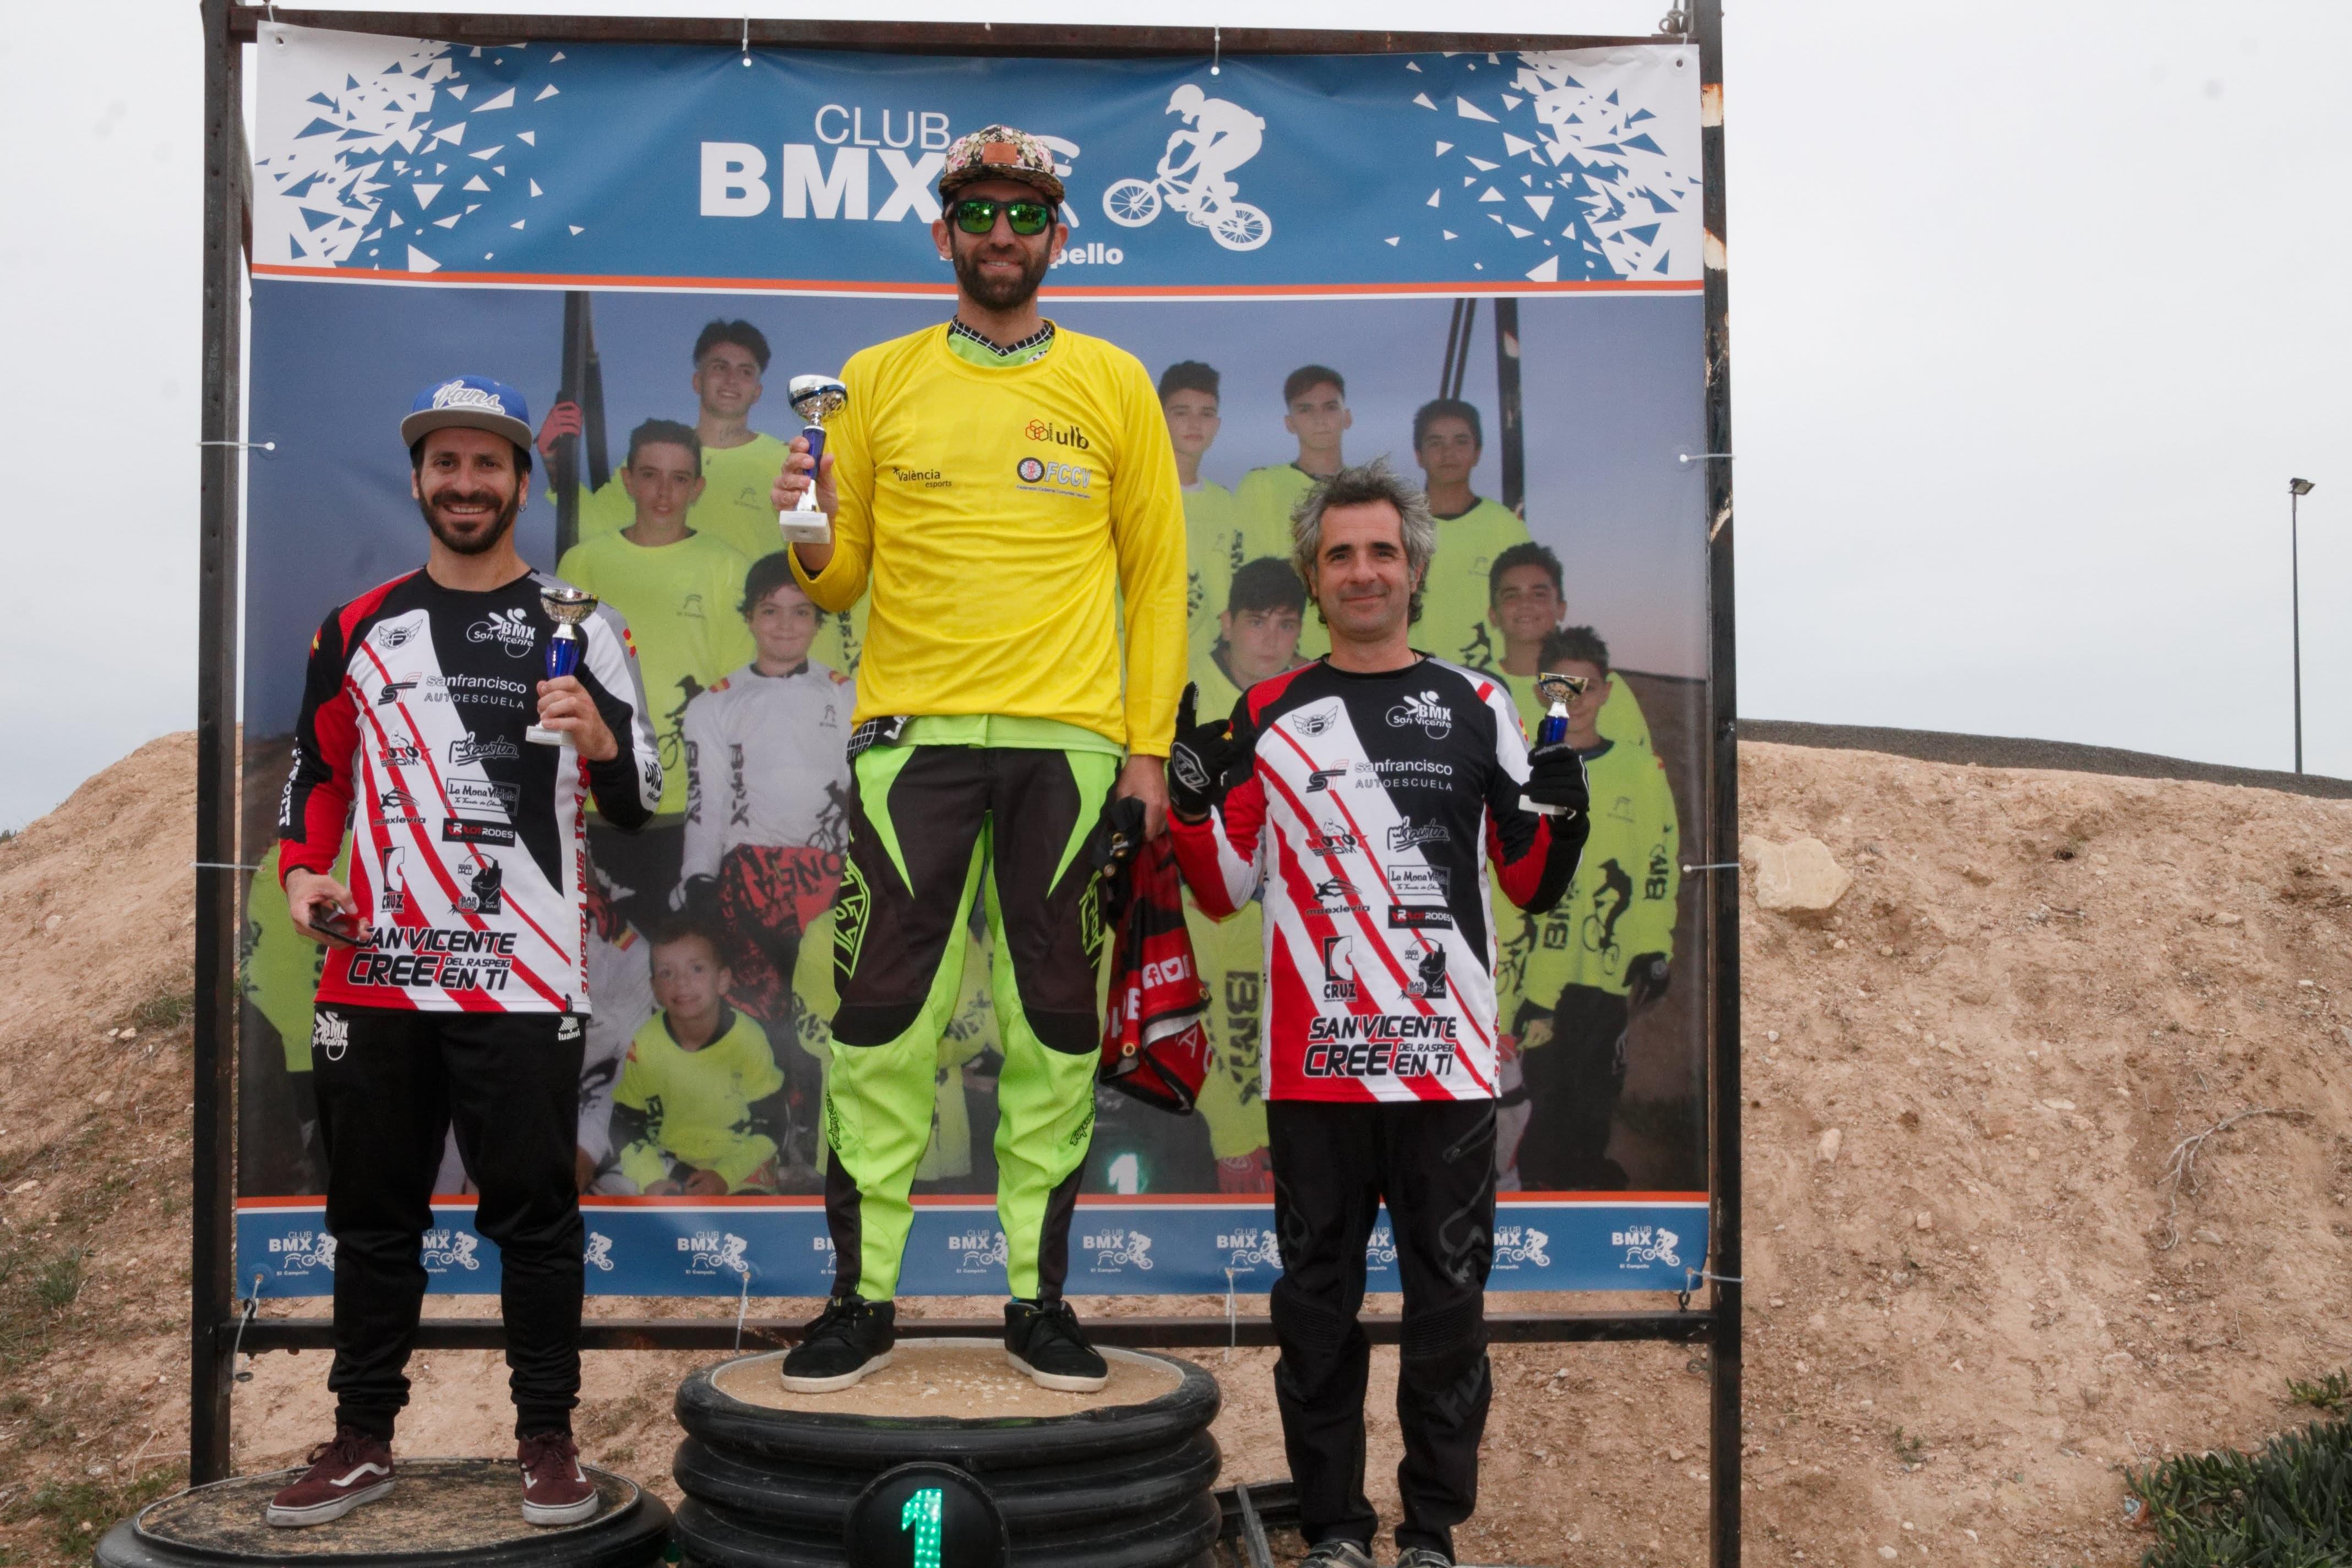 El Campello cierra la Challenge BMX 2018